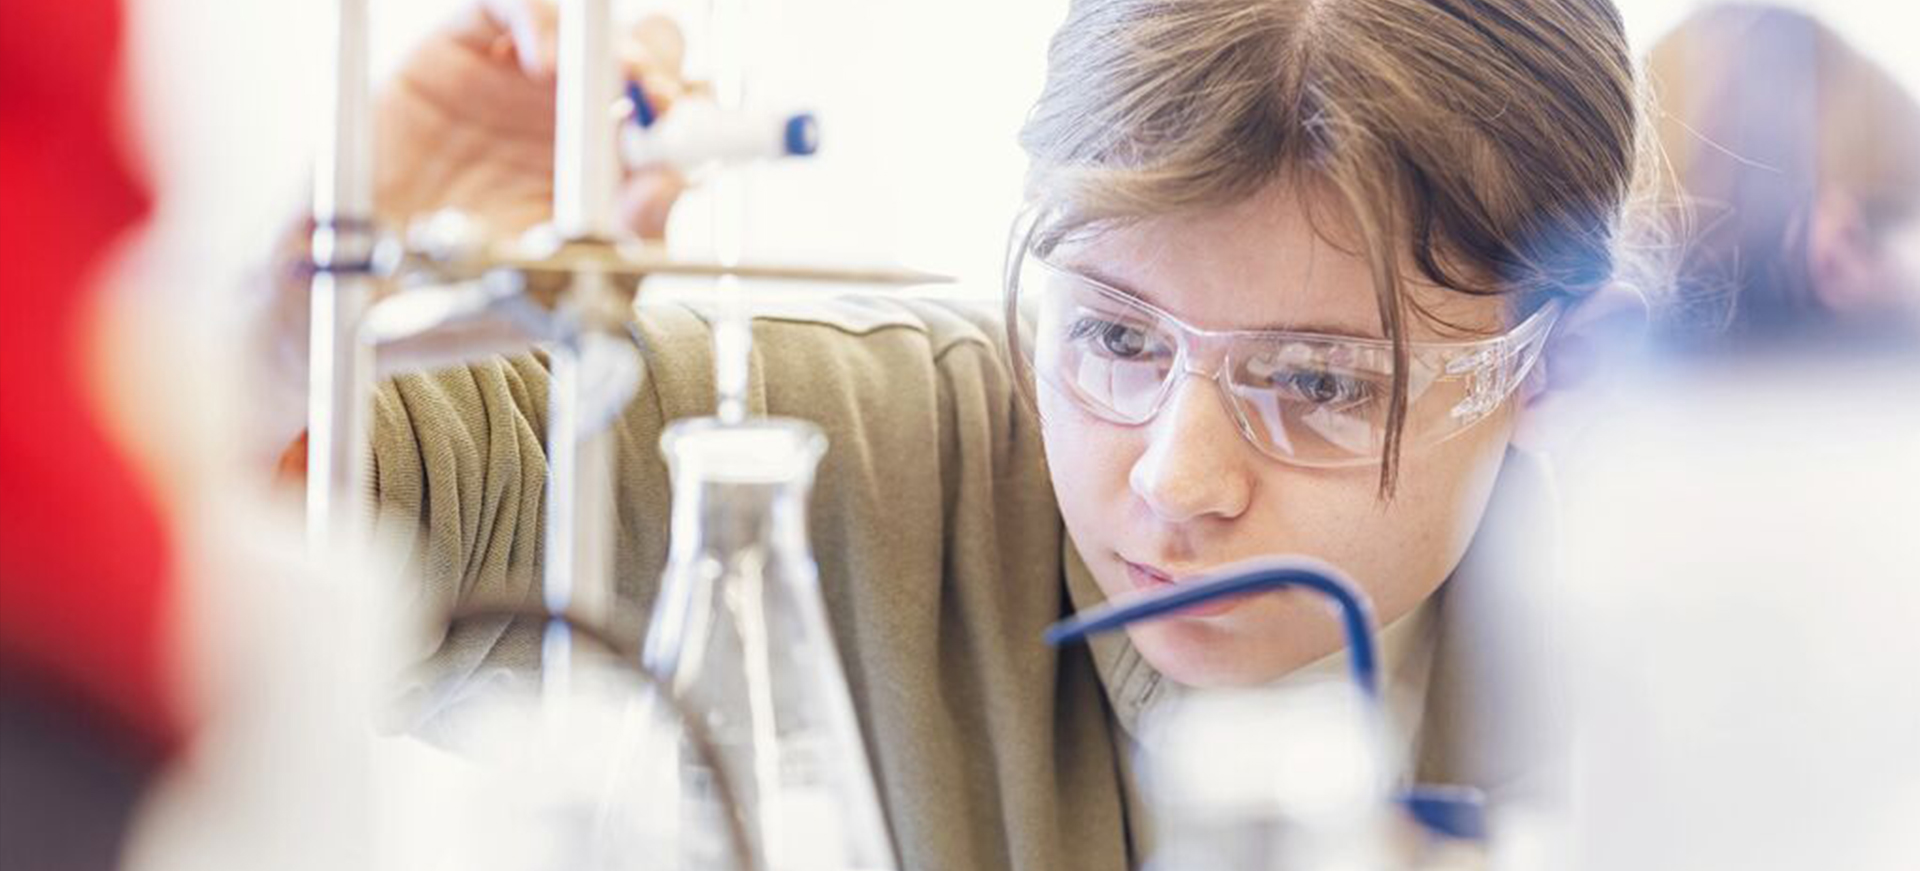 a young woman measure a liquid in a beaker